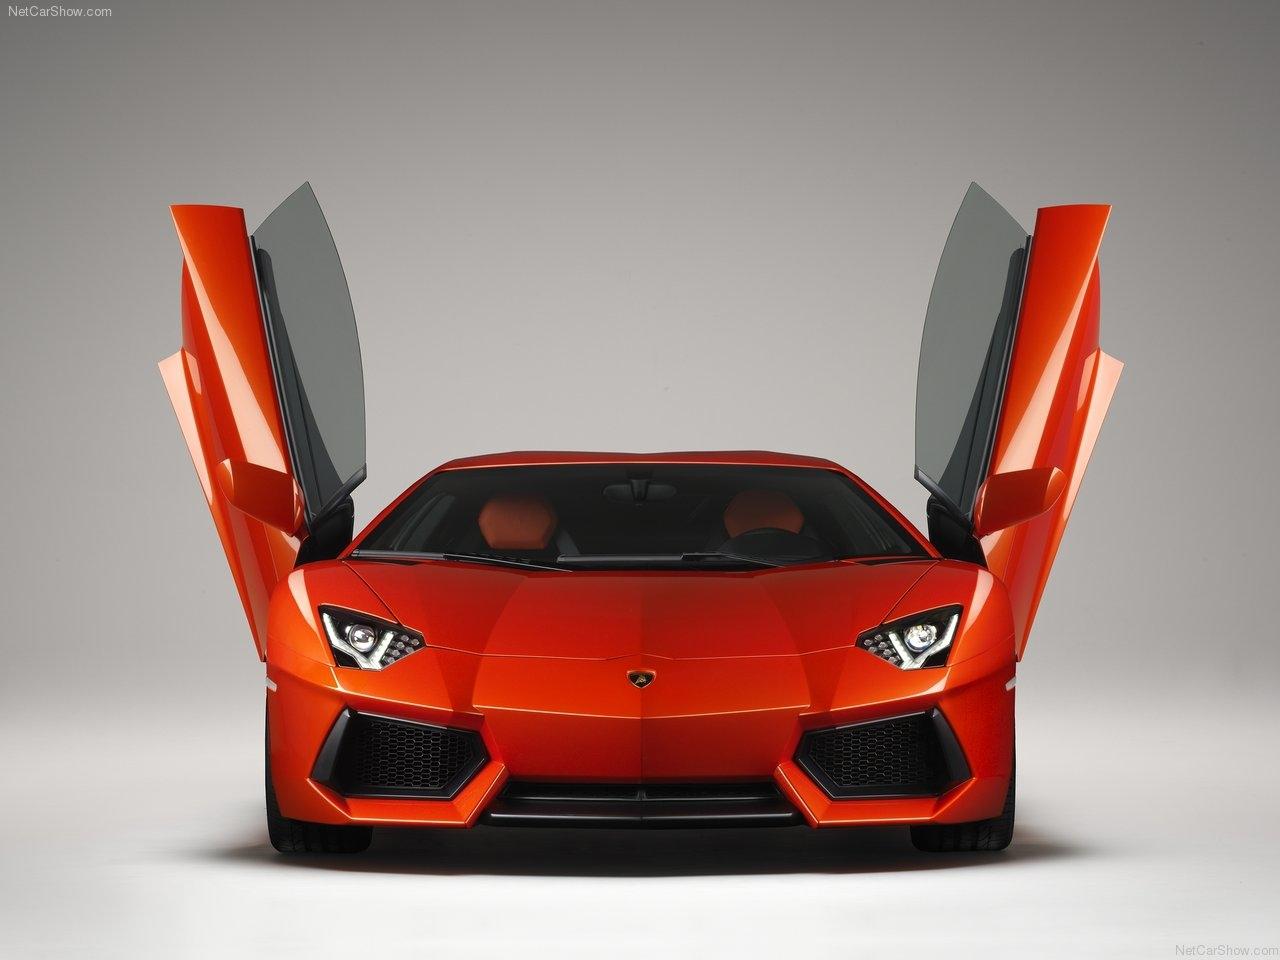 Lamborghini at 1024 x 768 size wallpapers HD quality